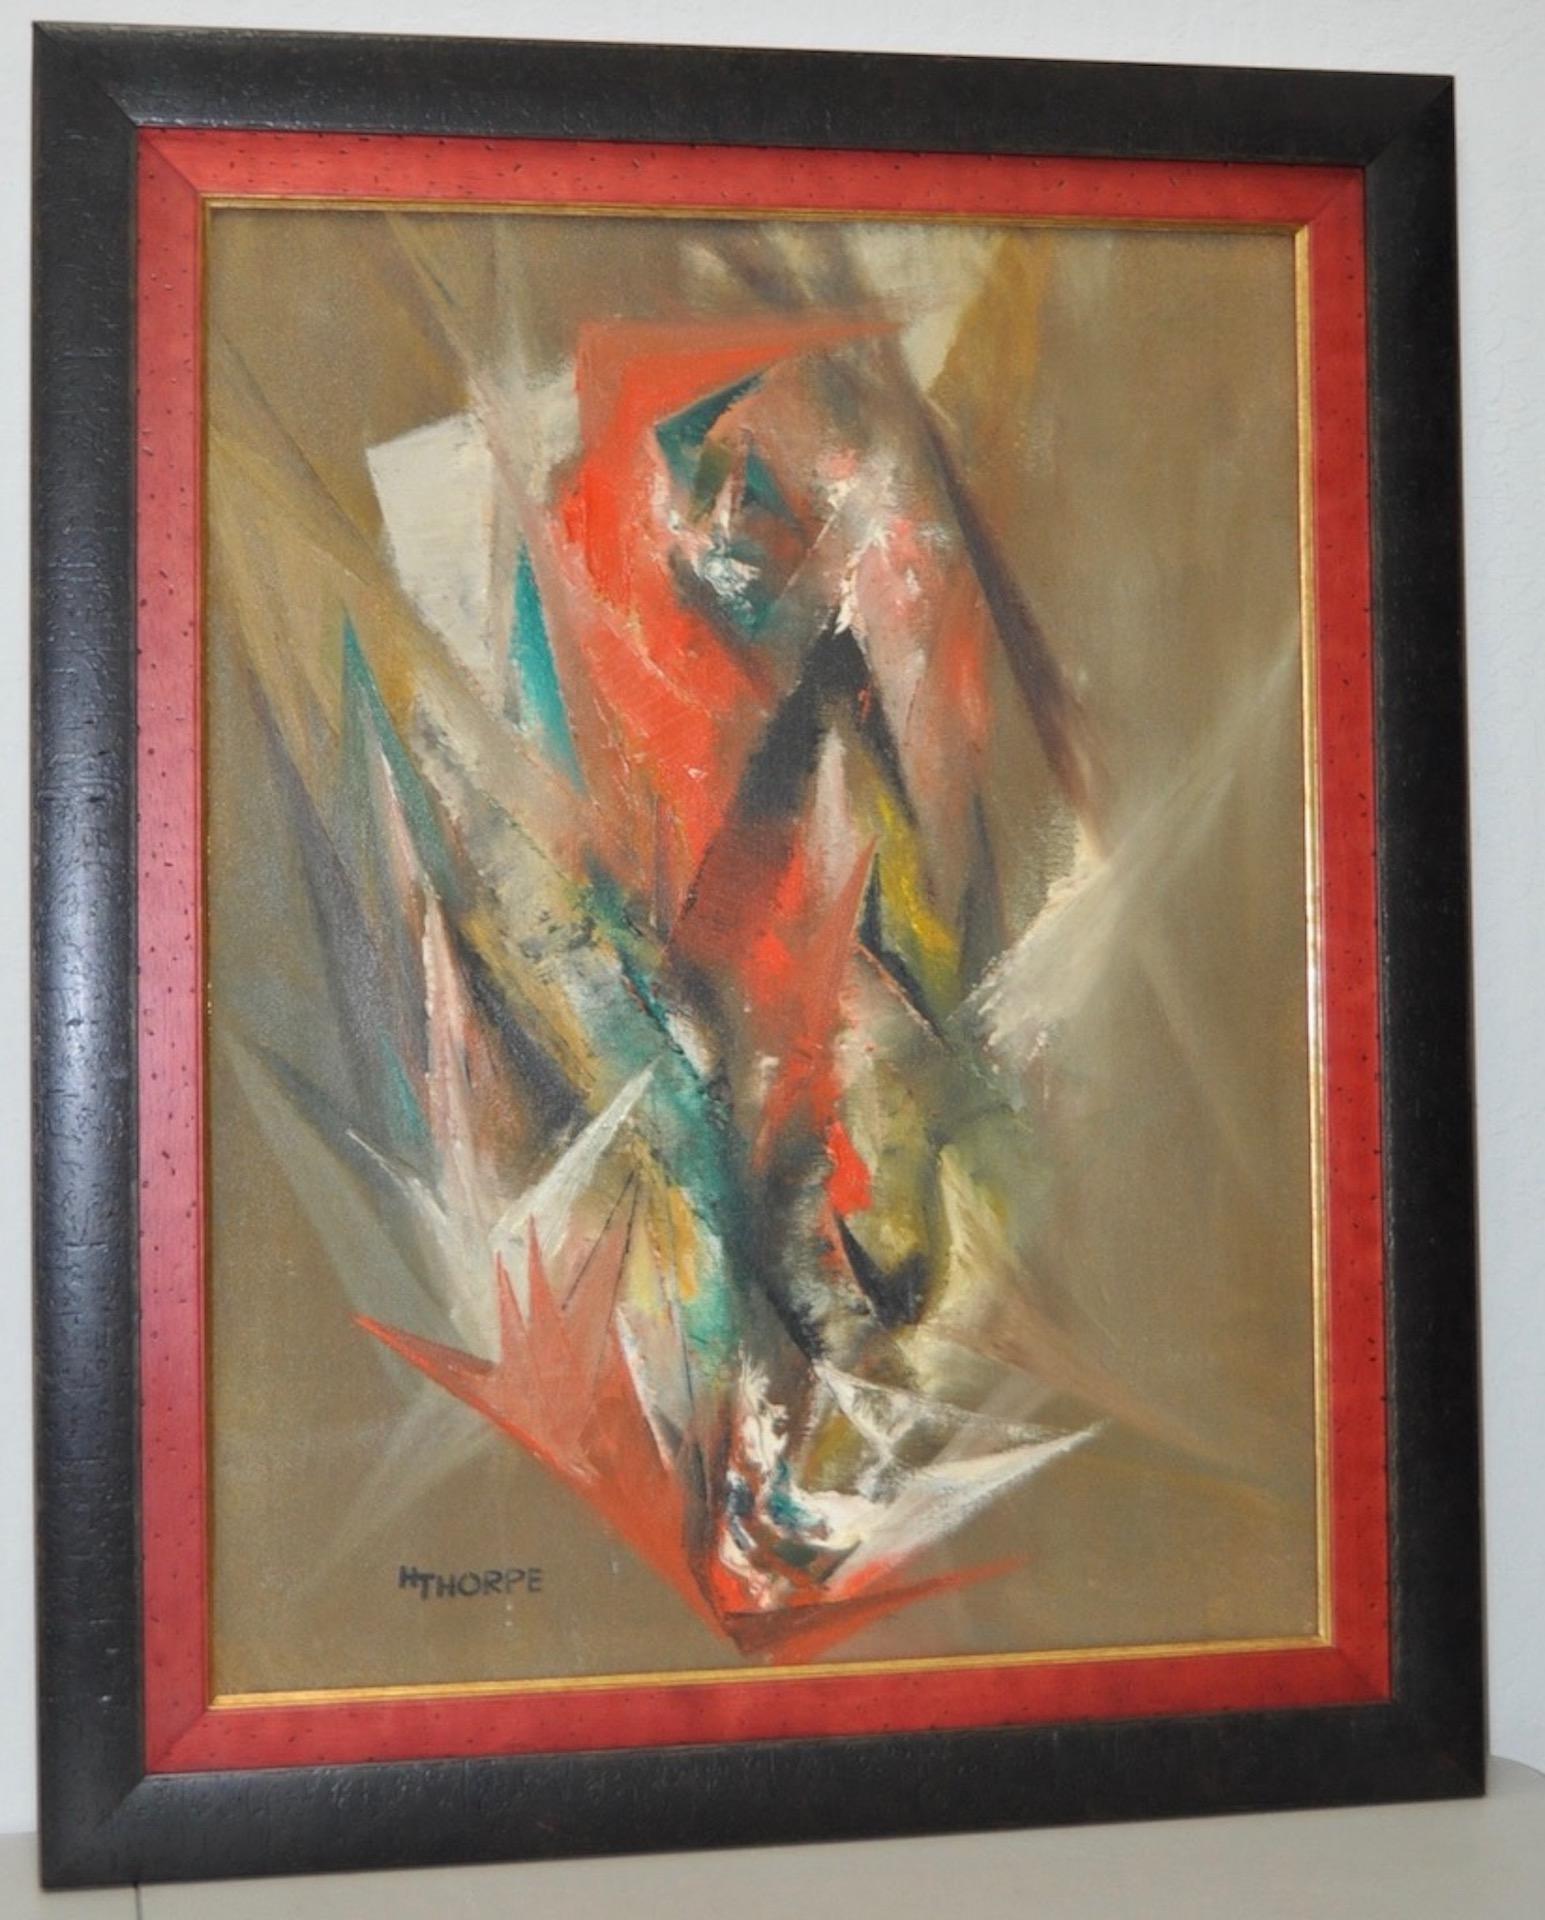 Harriet Thorpe "Fire Bird" Original Abstract Oil Painting c.1960s